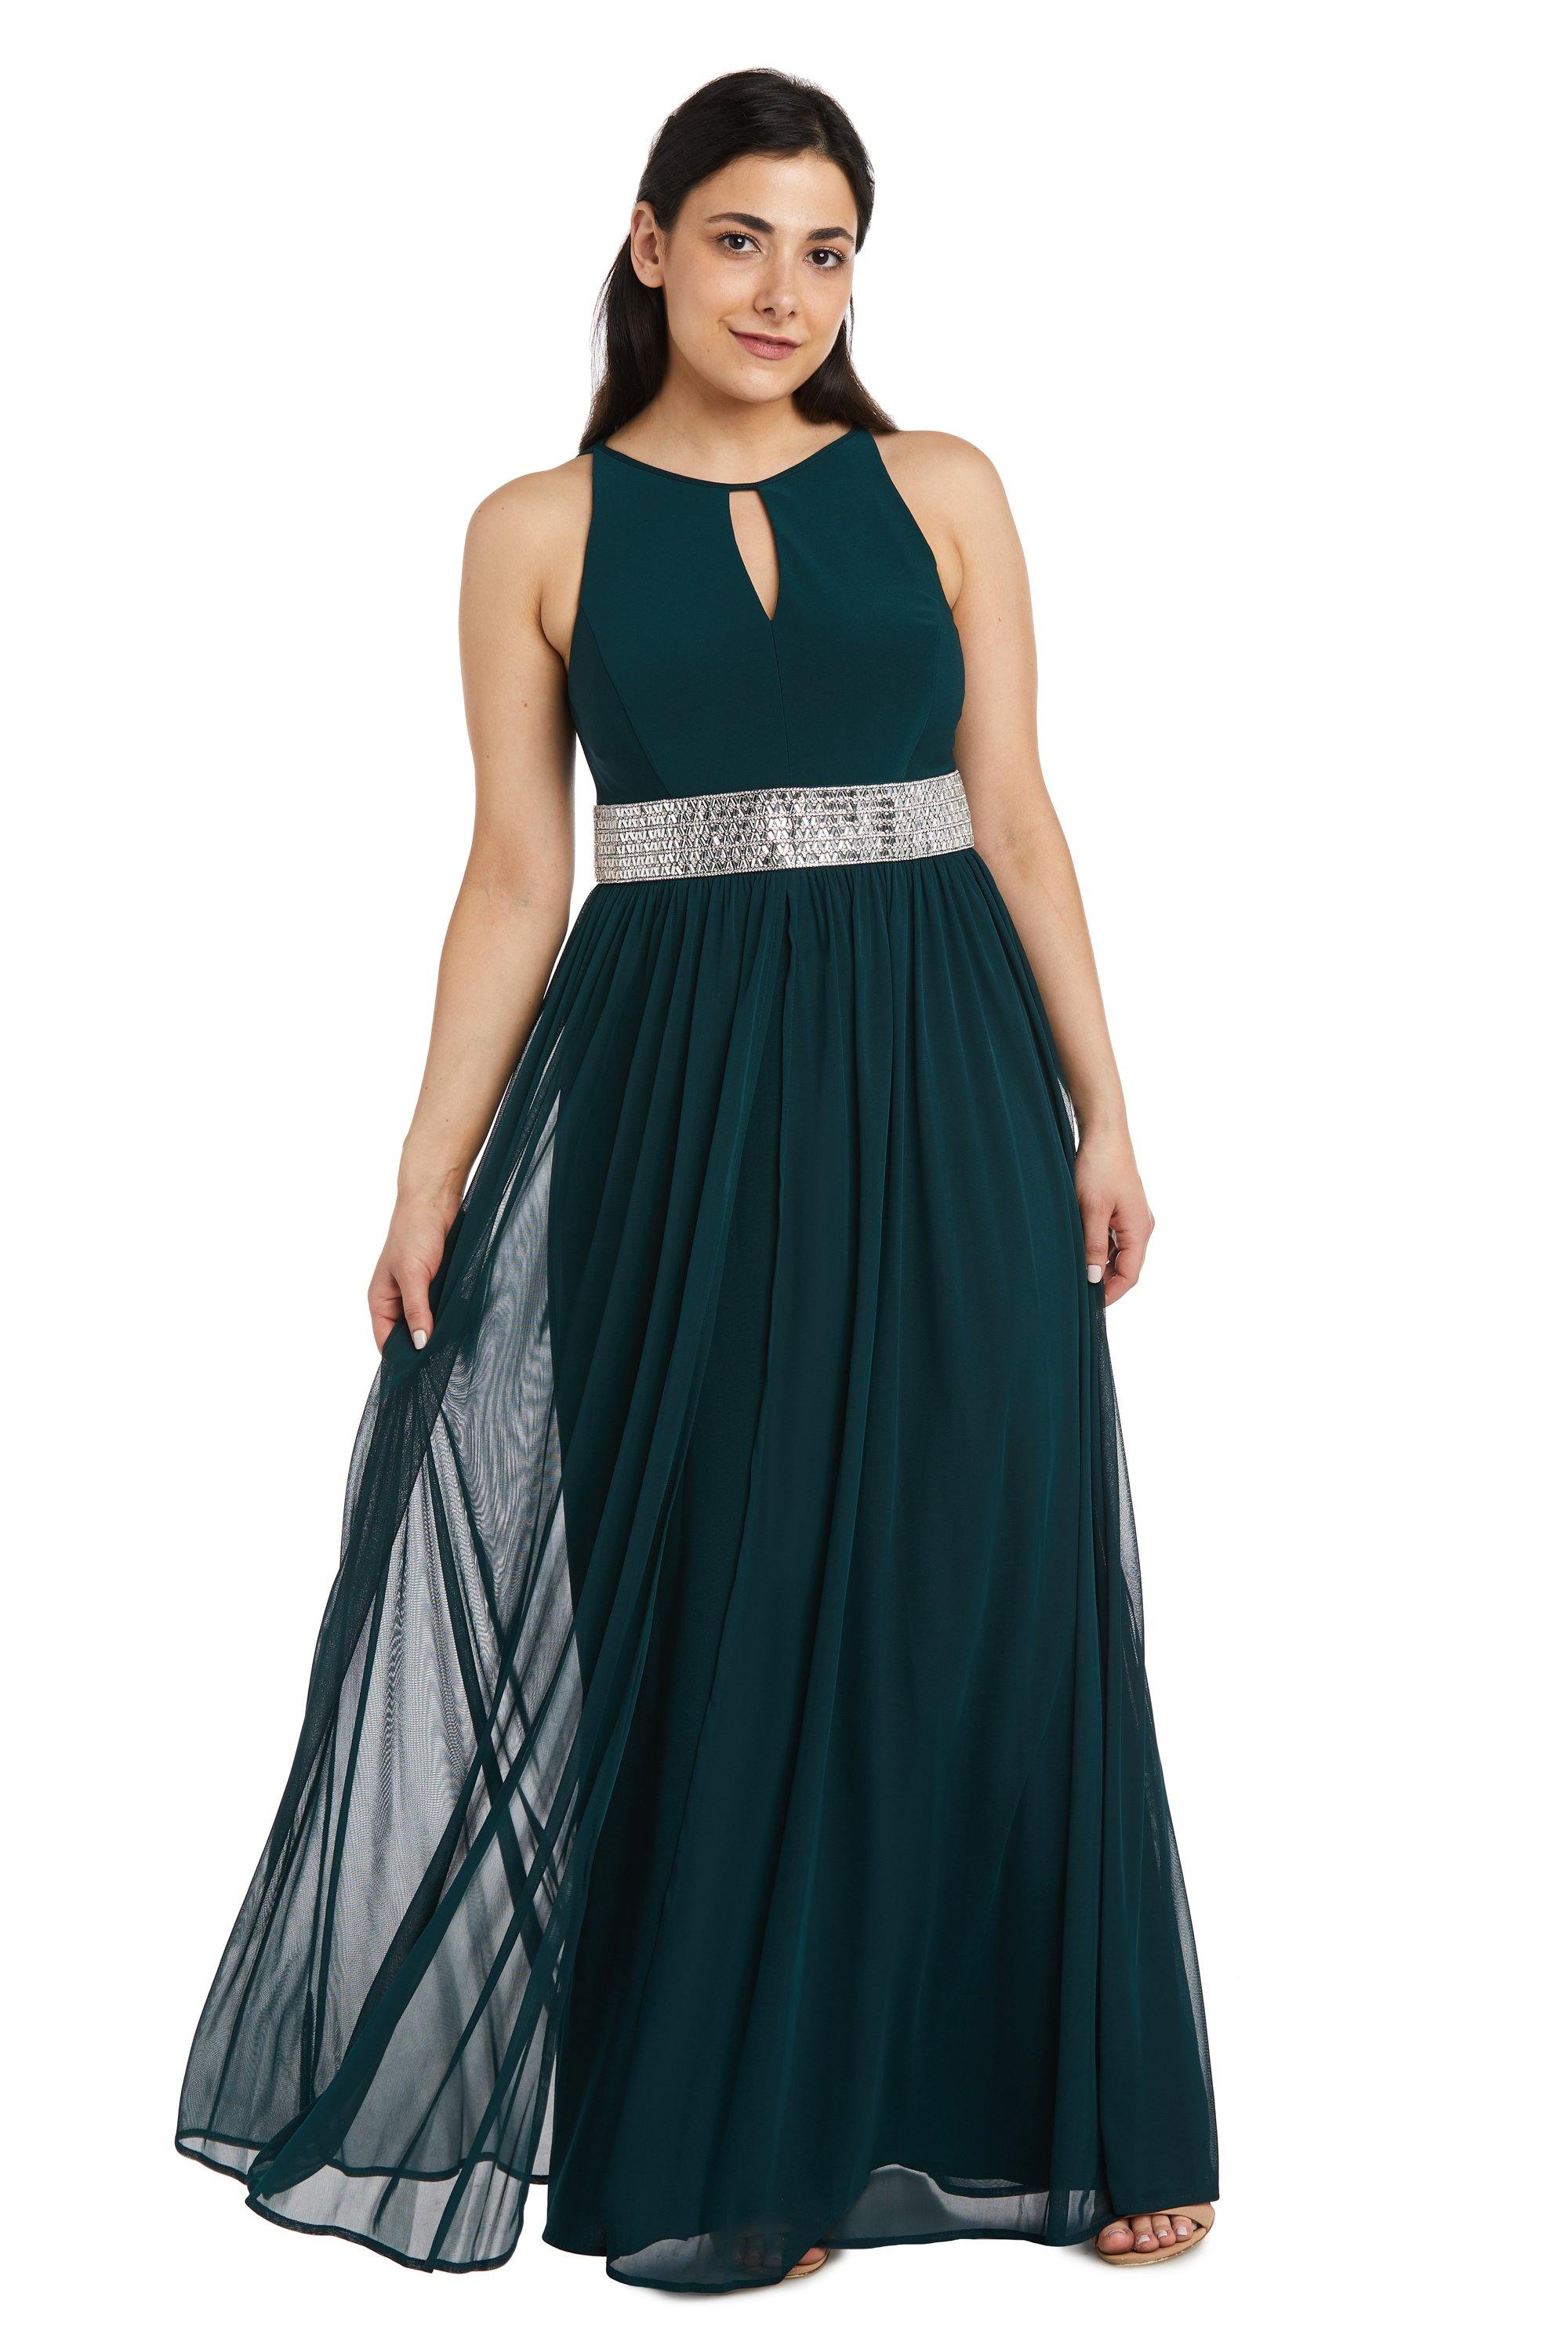 R&M Richards Long Formal Petite Halter Dress 5405P - The Dress Outlet